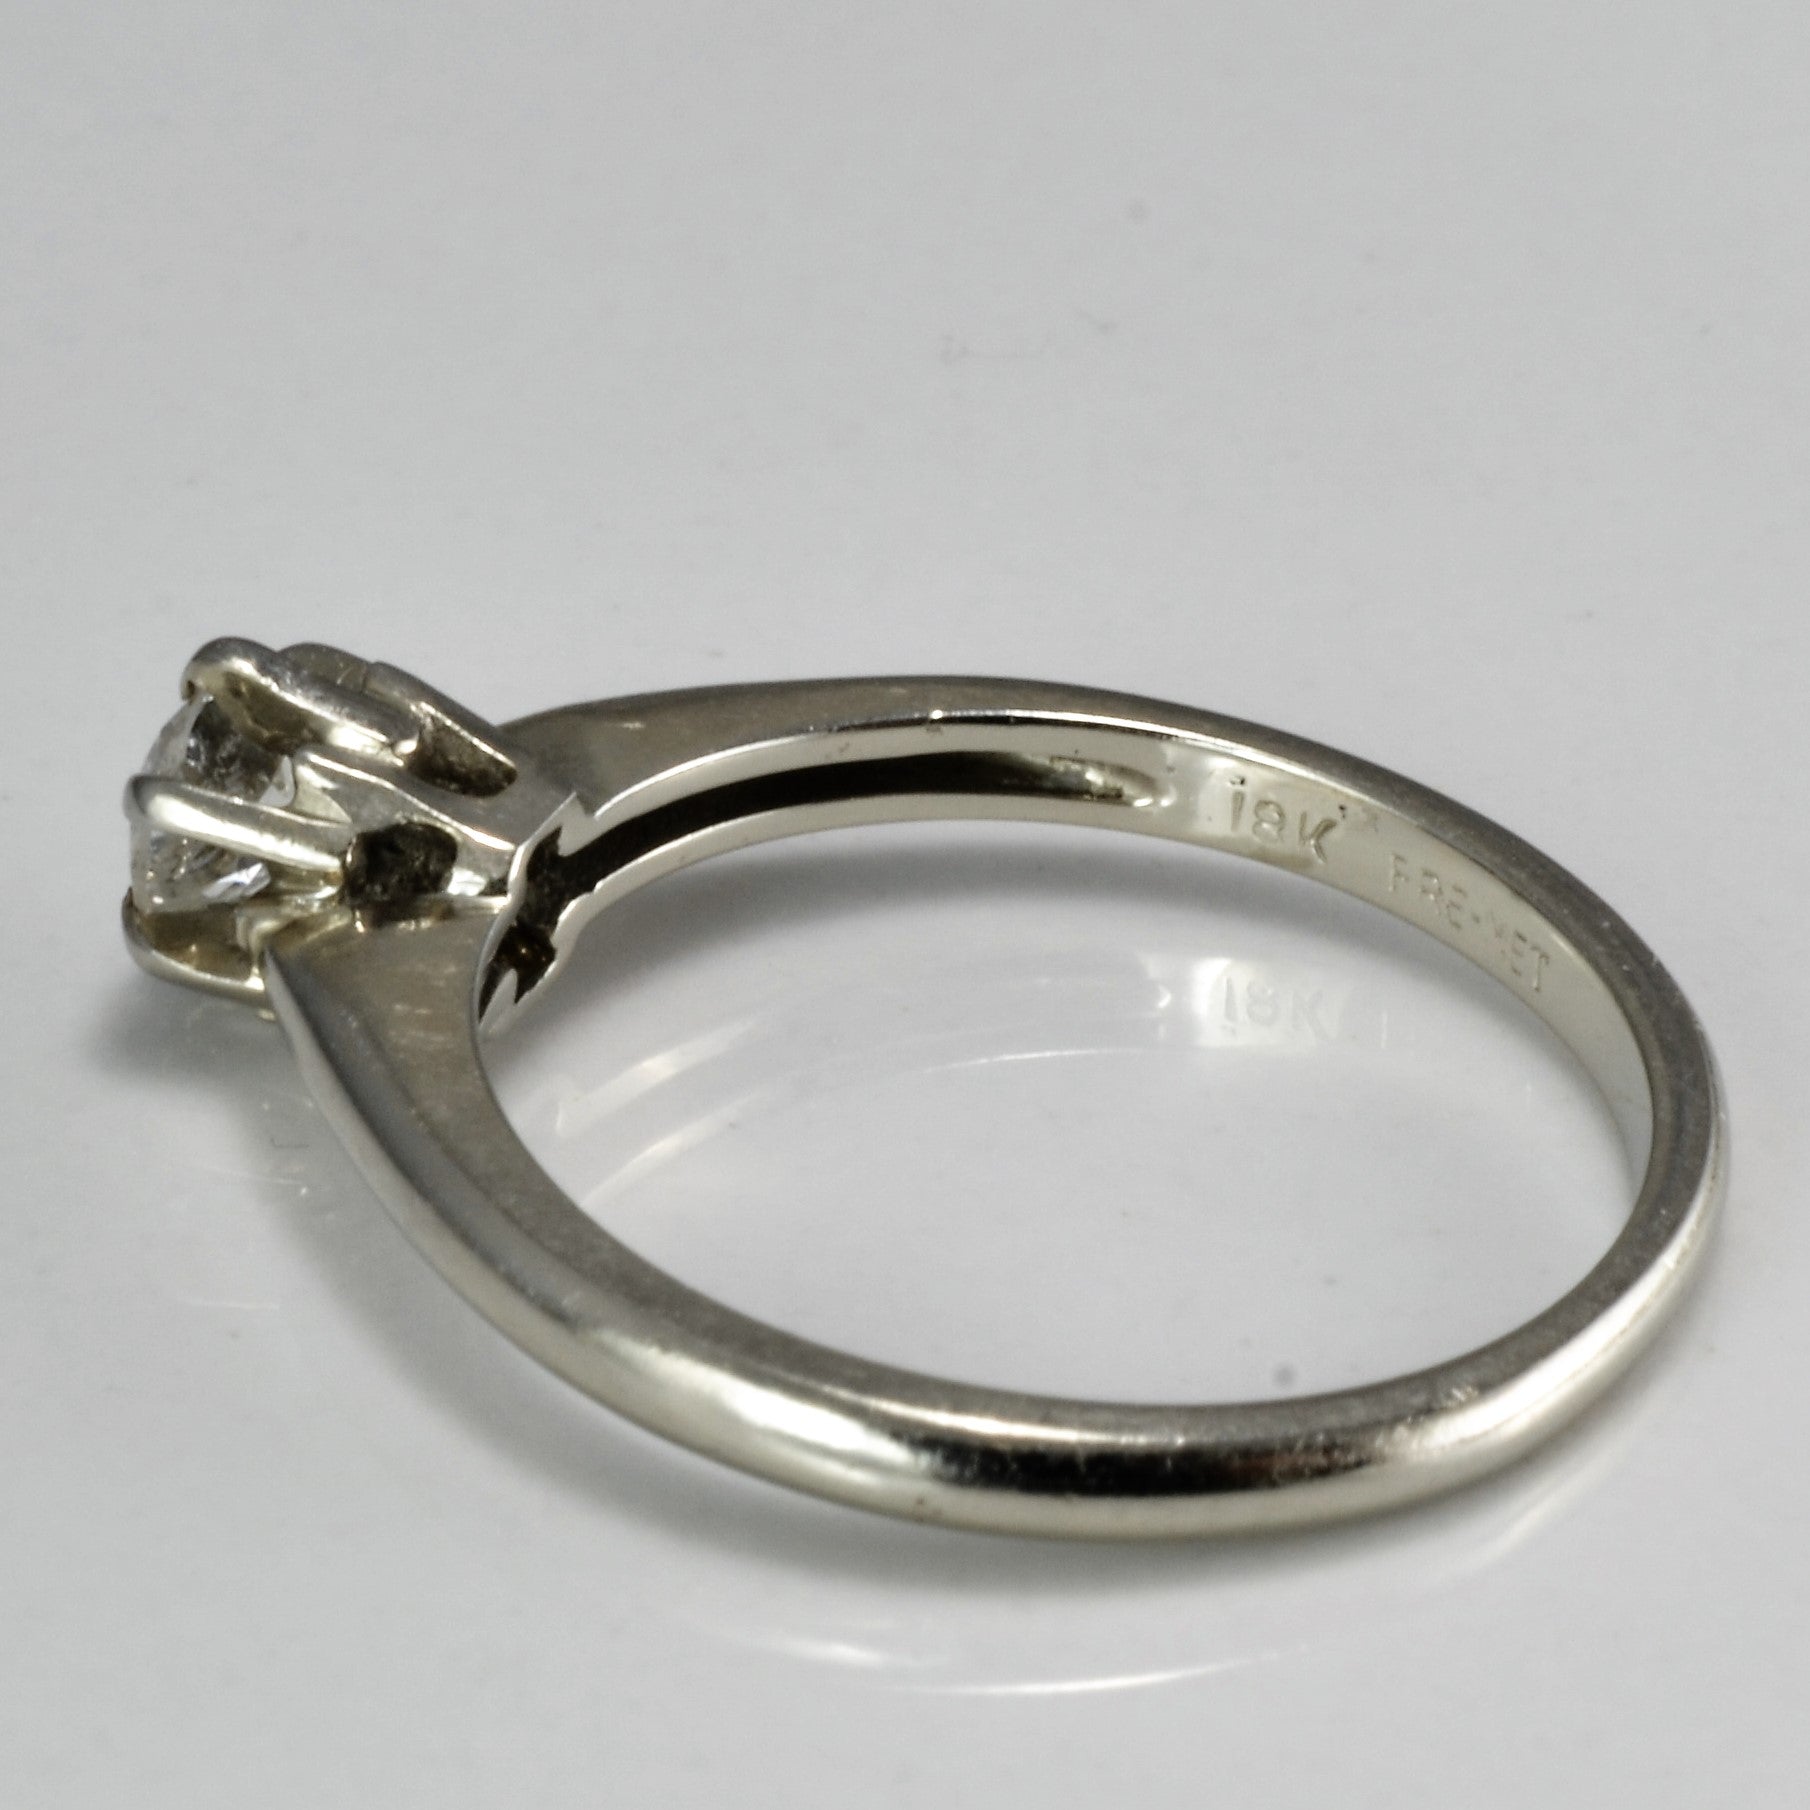 Old European Diamond Solitaire Ring | 0.22ct | SZ 6 |